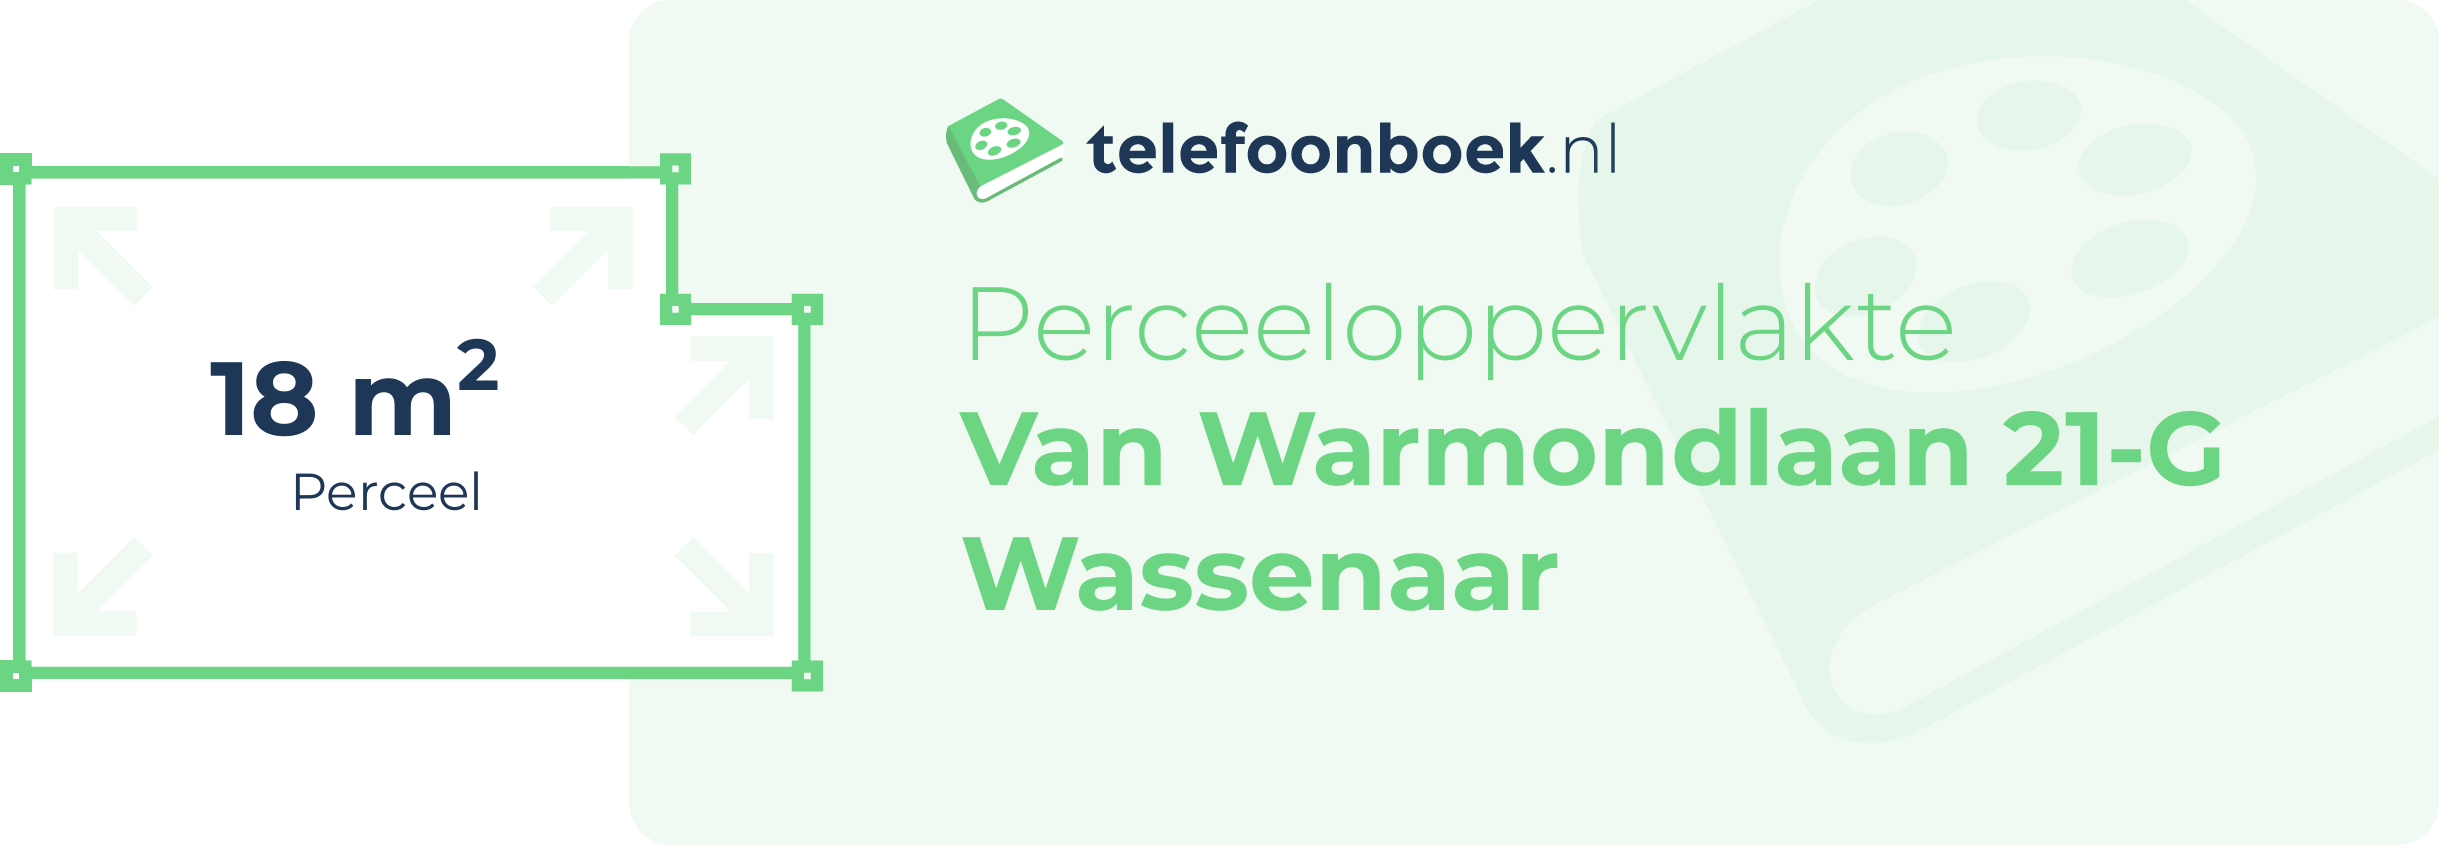 Perceeloppervlakte Van Warmondlaan 21-G Wassenaar